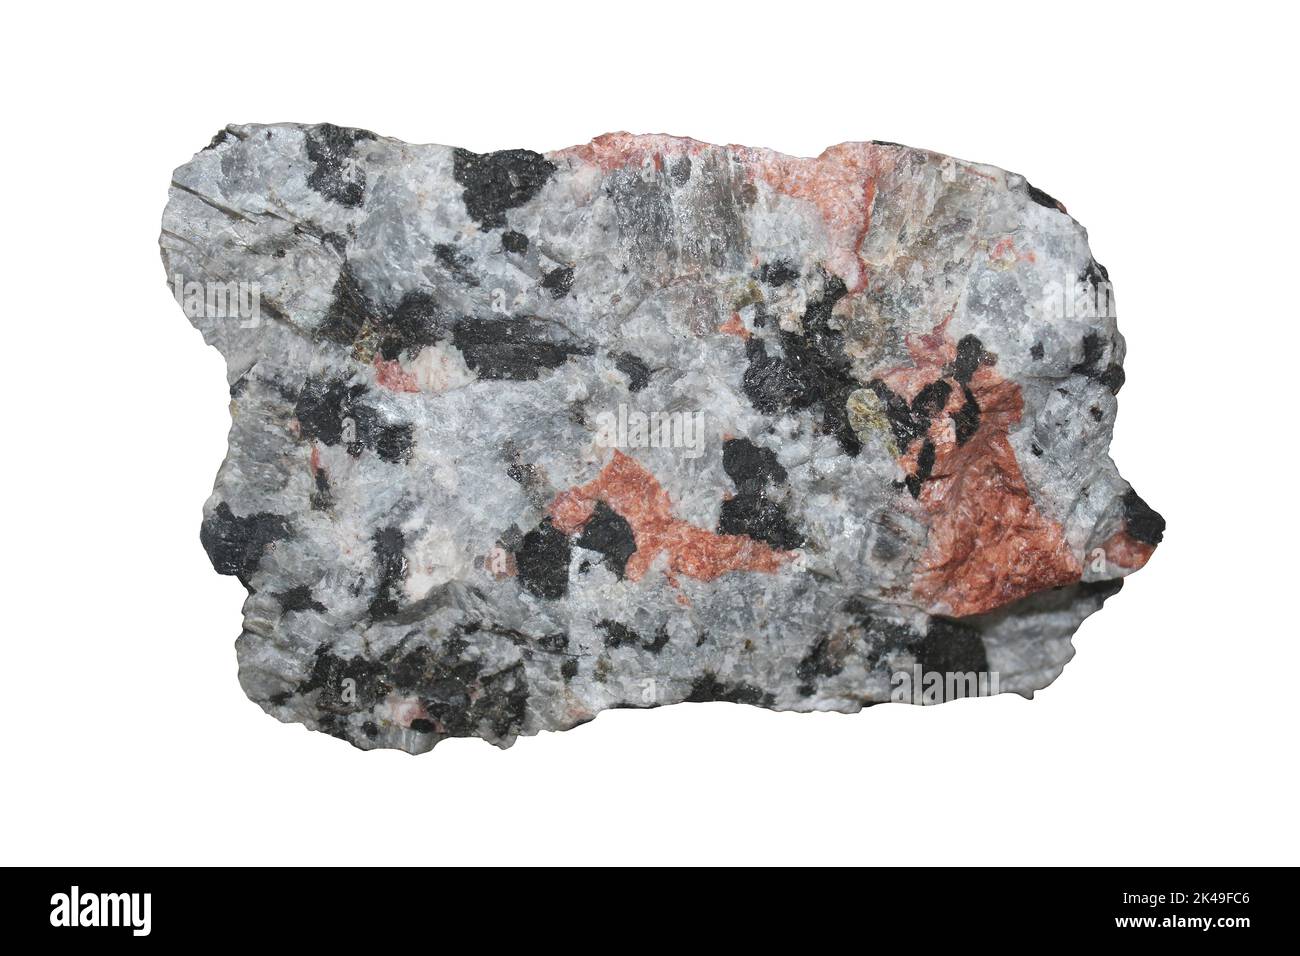 Barkevikite - black crystals in pegmatite - Barkevik, Norway Stock Photo